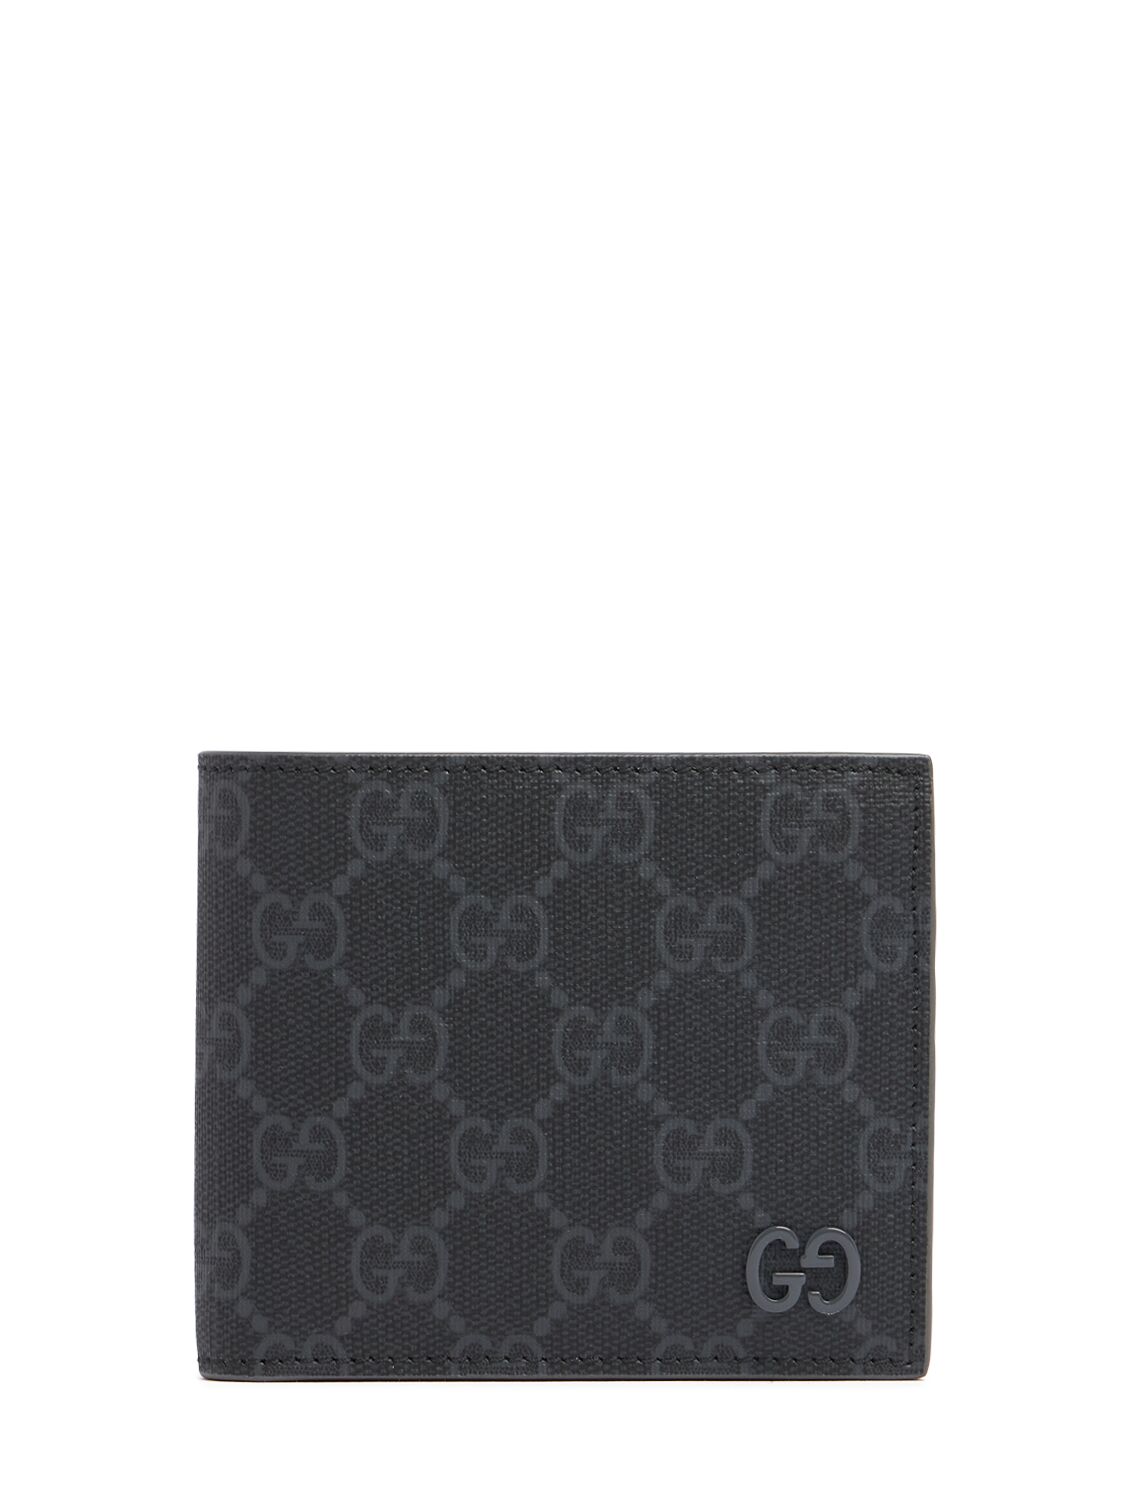 Gucci Bicolor Gg Billfold Wallet In Black/steel